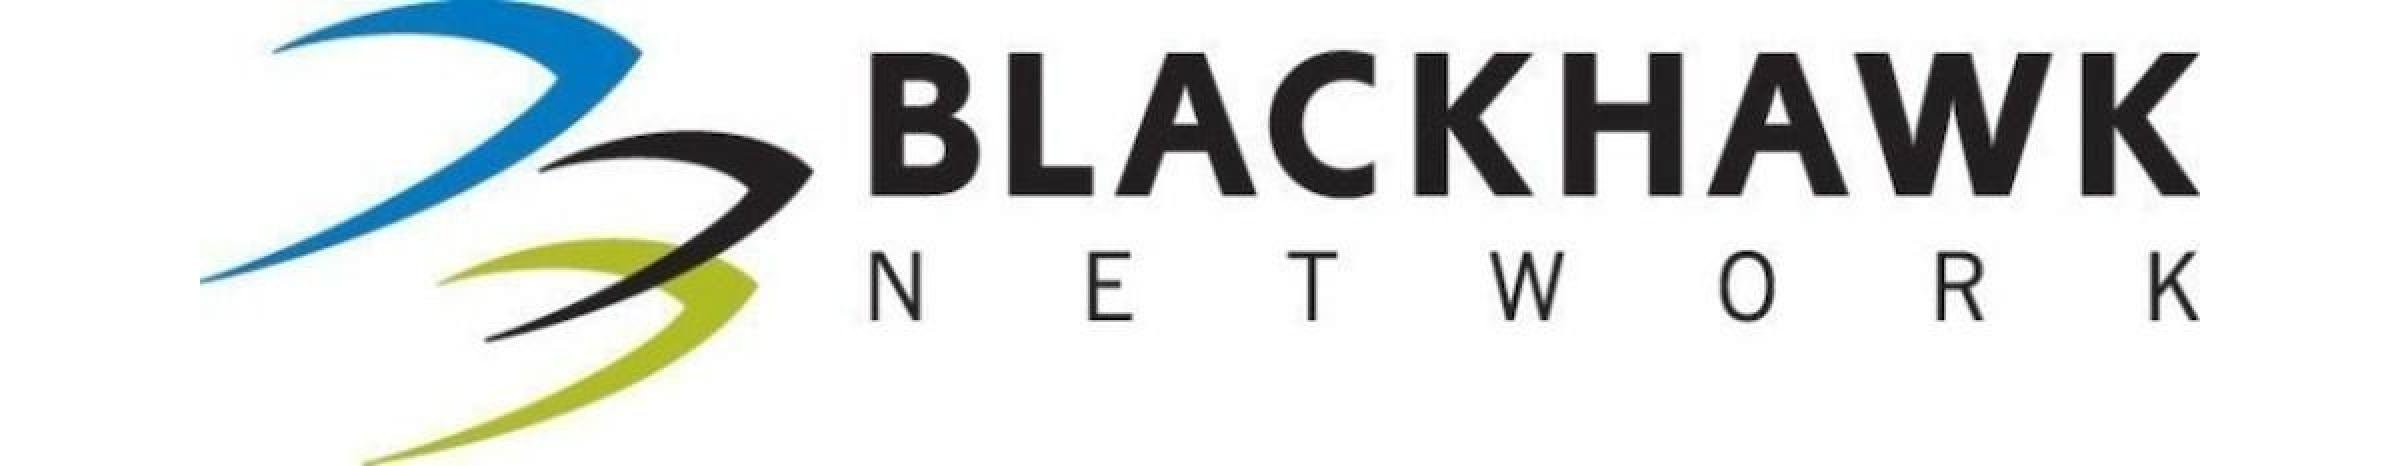 Blackhawk network